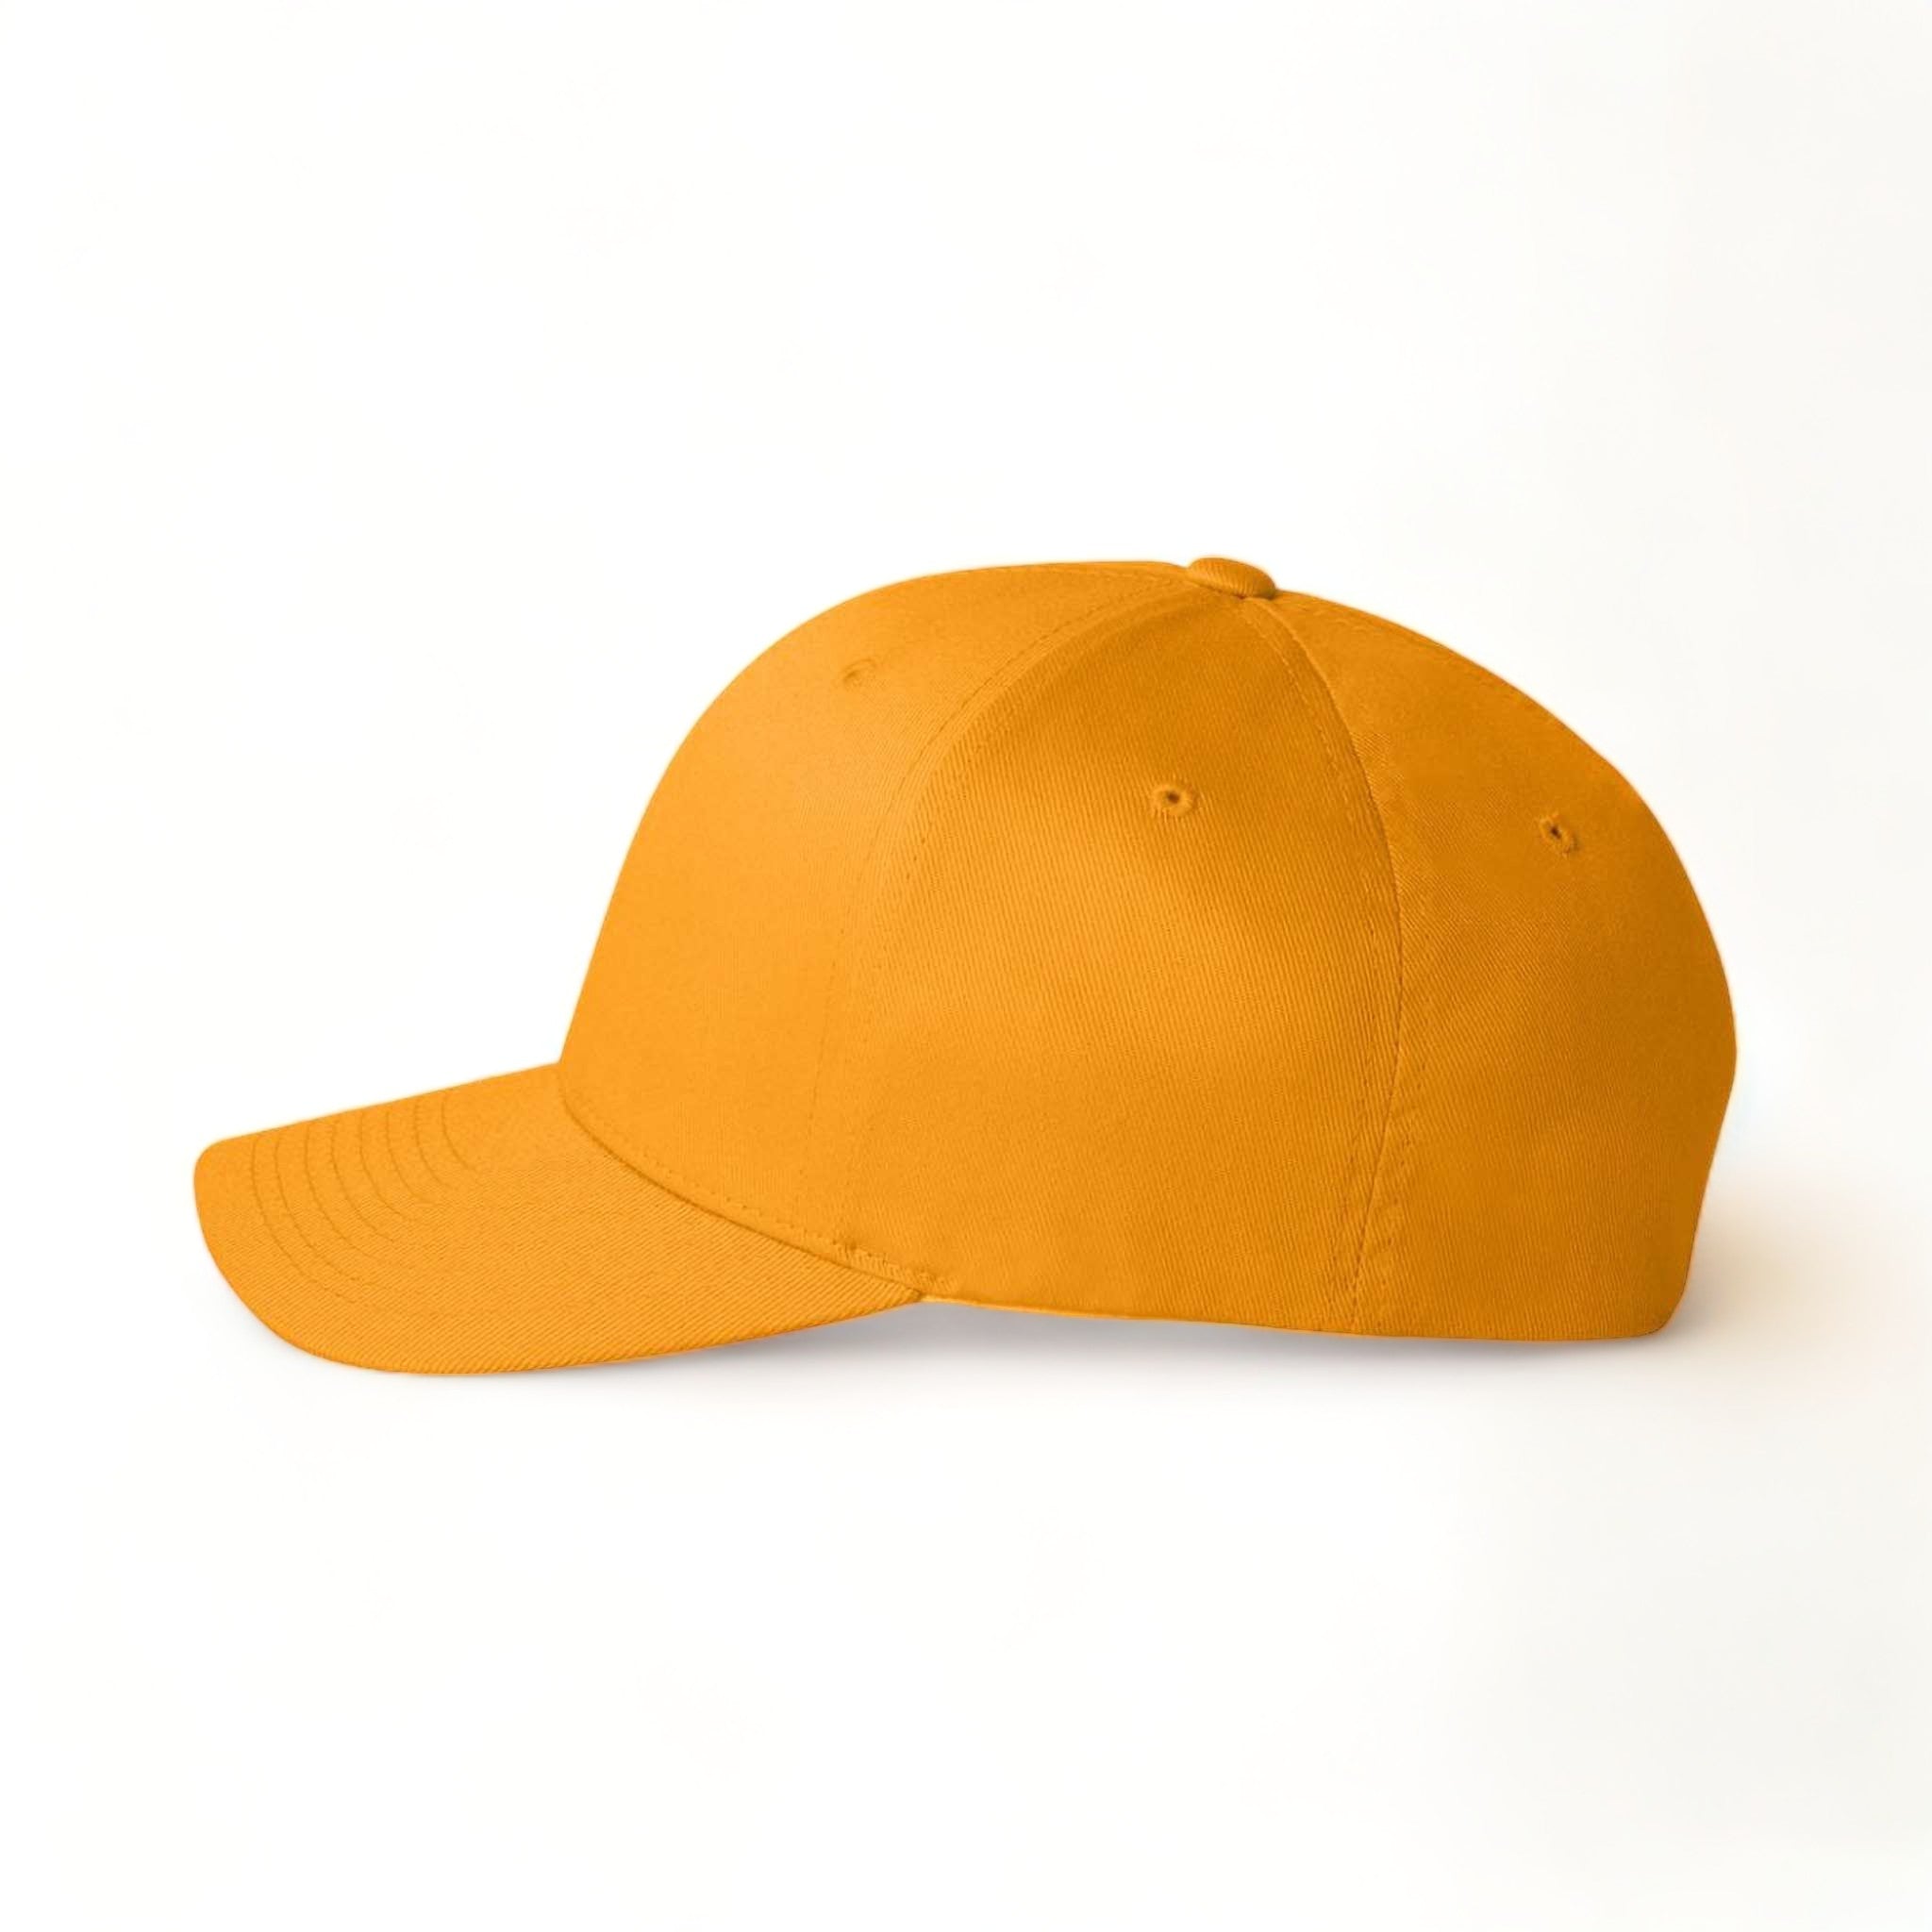 Side view of Flexfit 6277 custom hat in gold